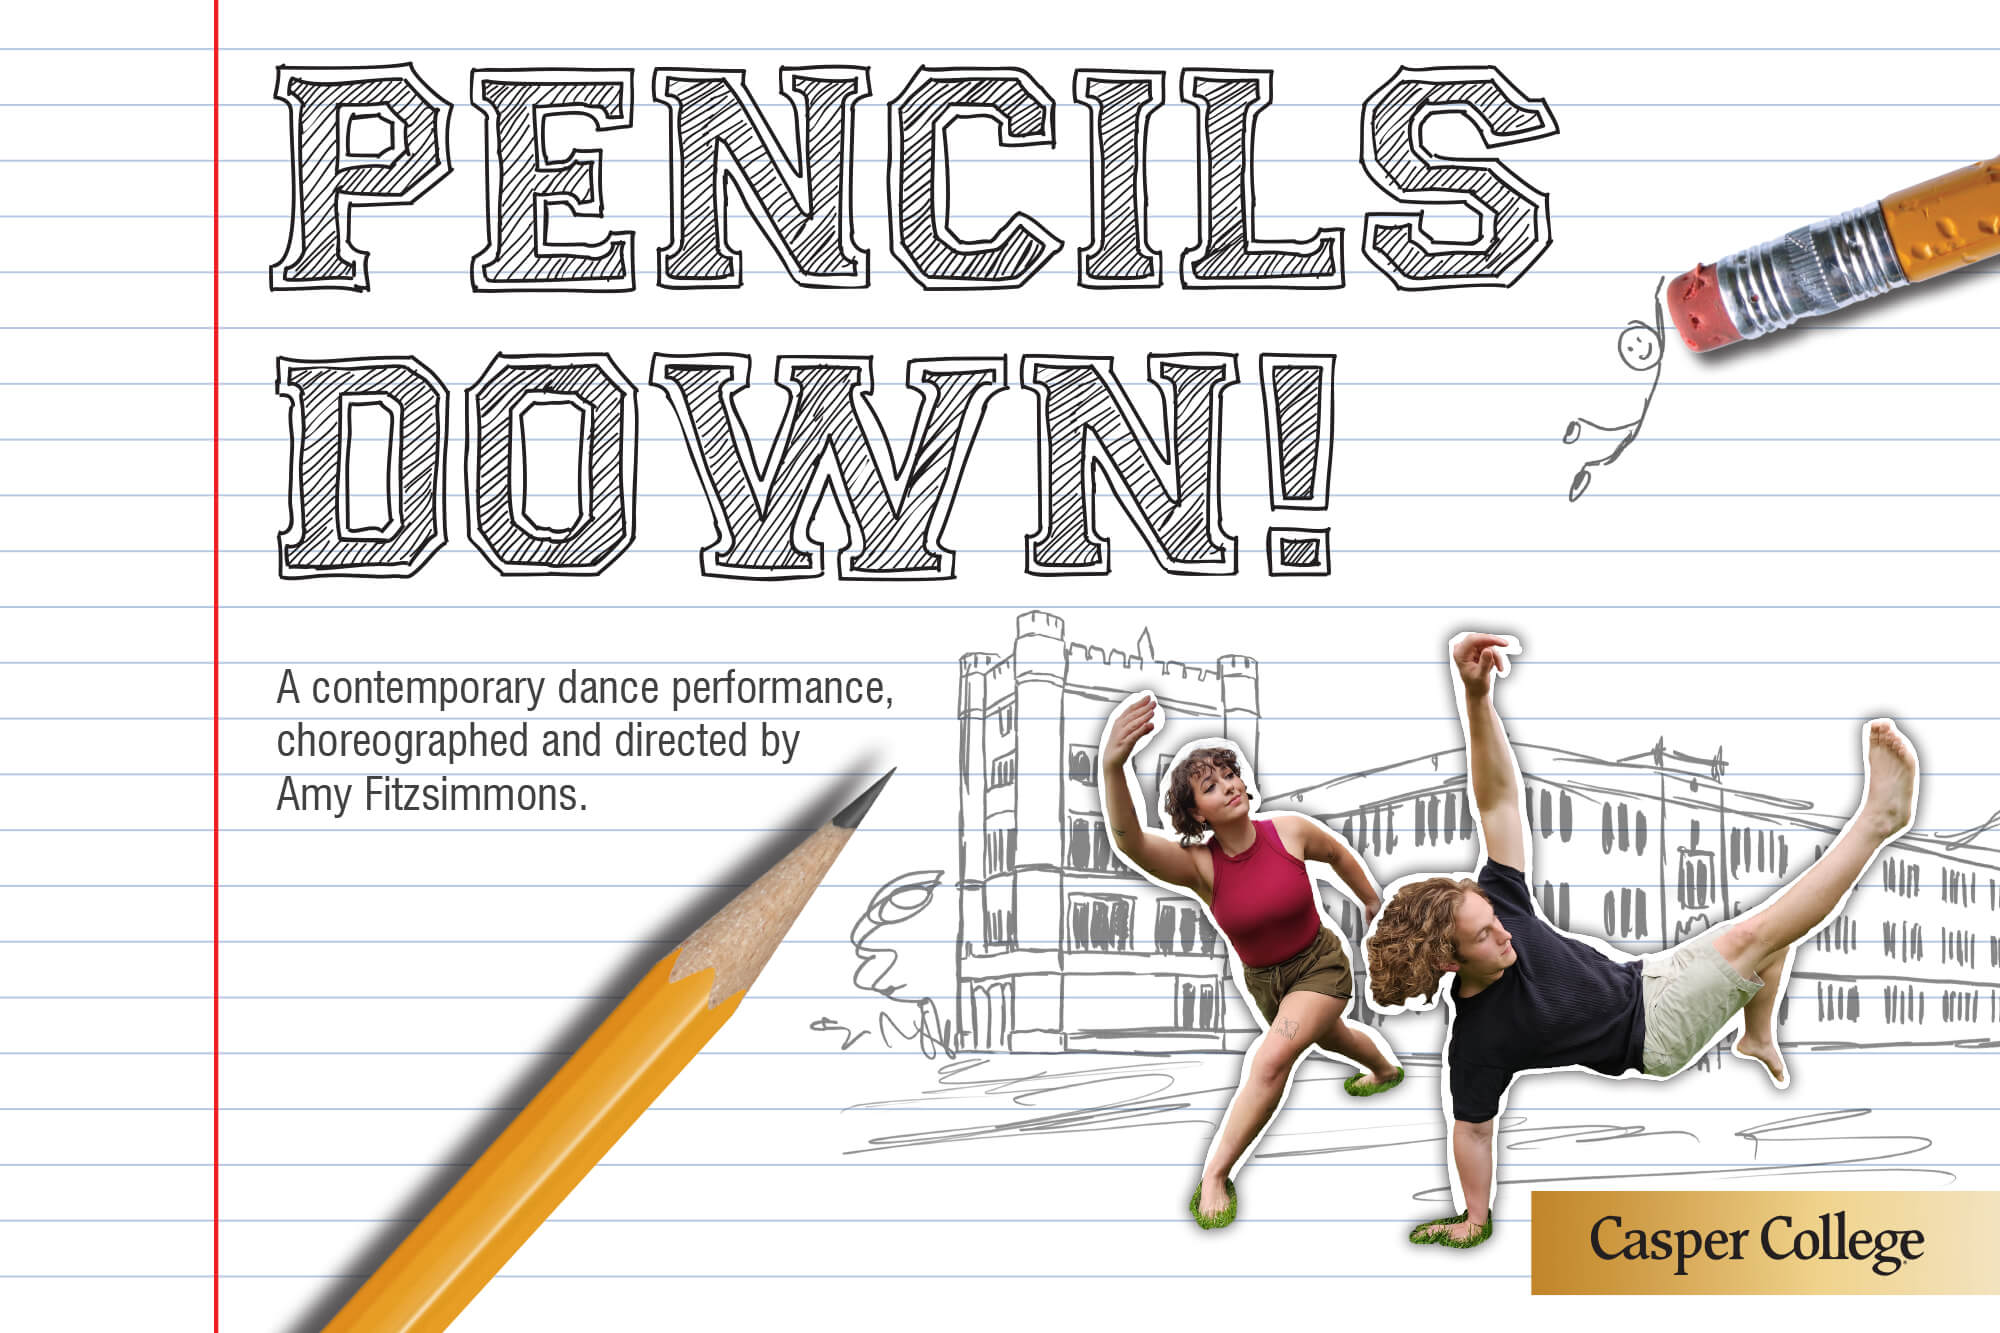 Image for "Pencils Down" dance concert press release.